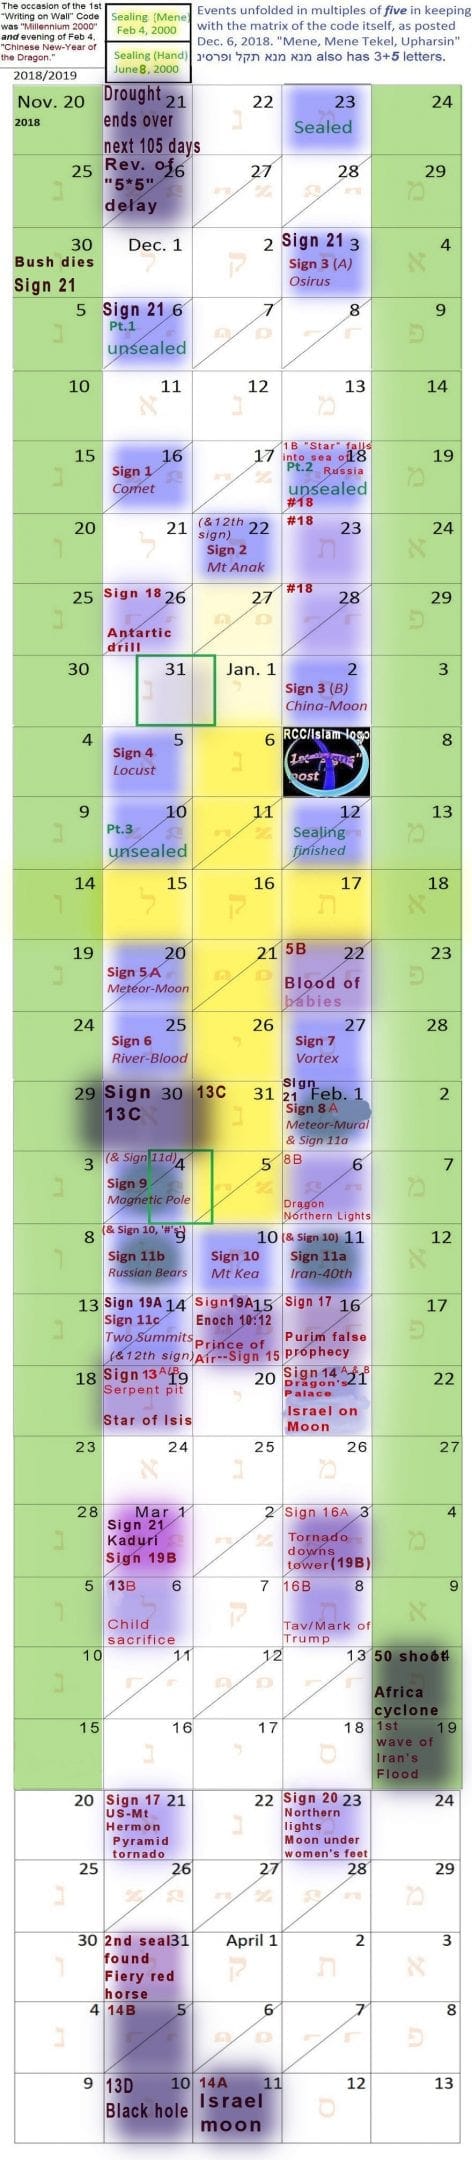 Calendar of Signs and Wonders that happened after the Mene Tekel code